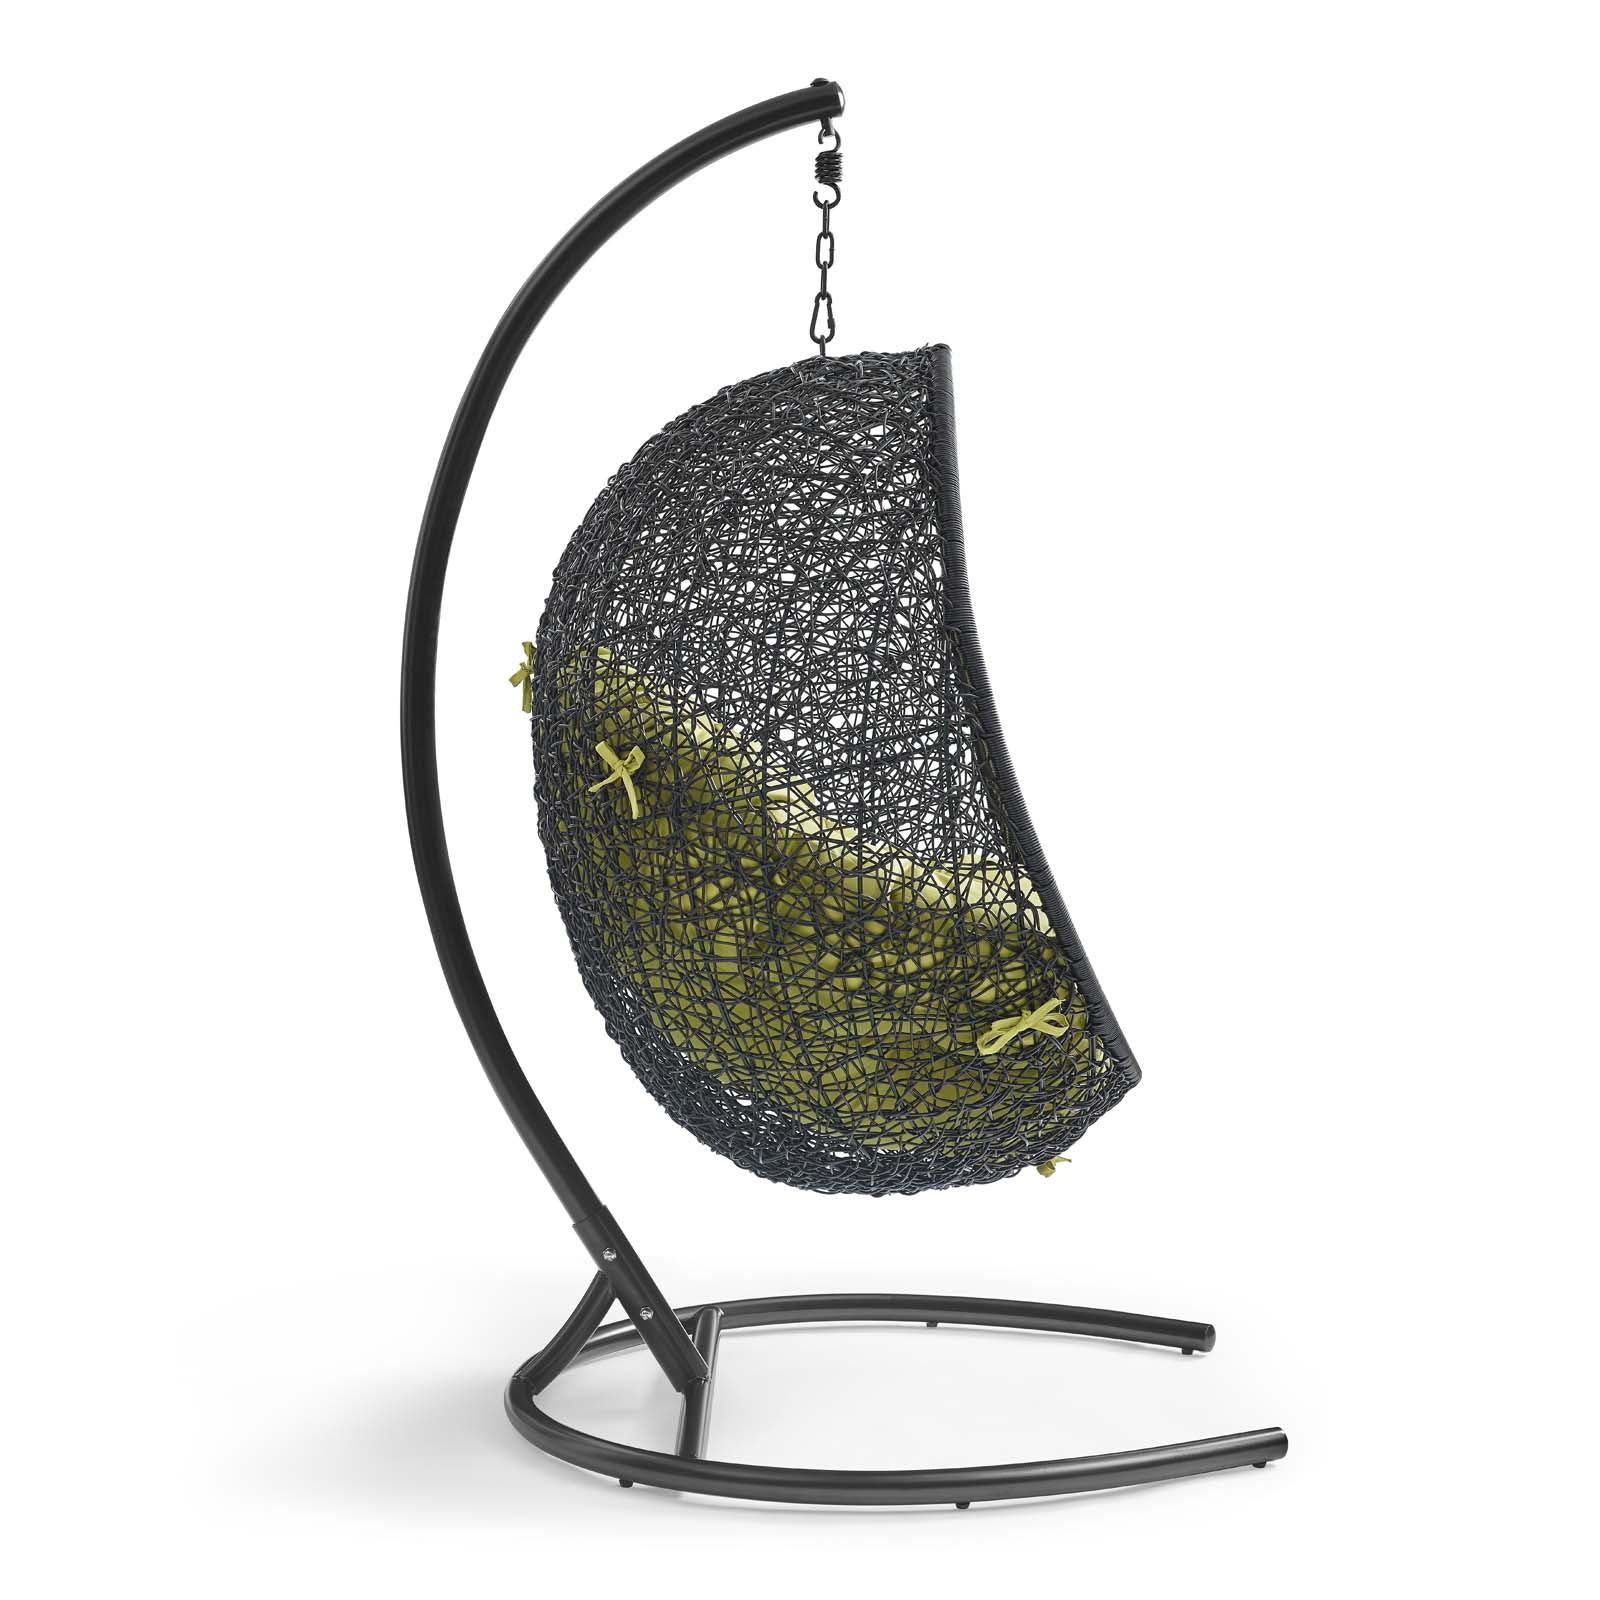 Modway Outdoor Swings - Encase Swing Outdoor Patio Lounge Chair Peridot